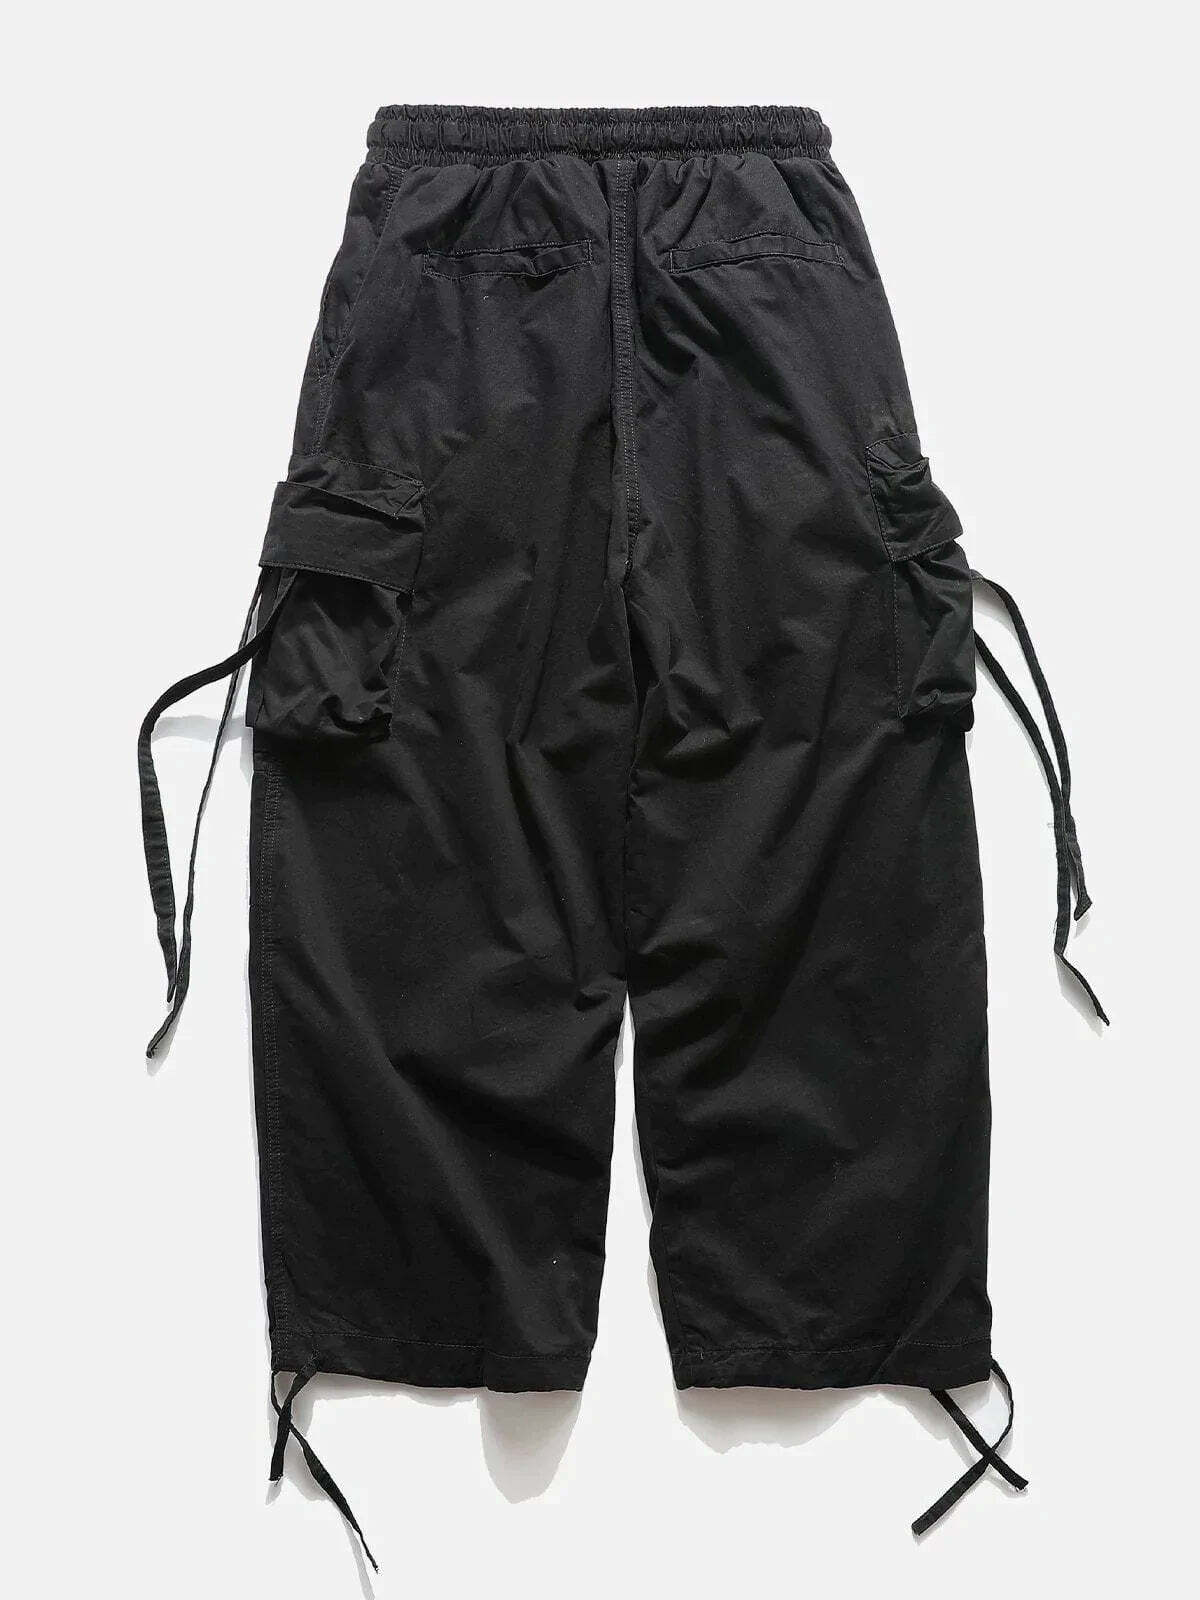 flap pocket pants functional & edgy streetwear 6500